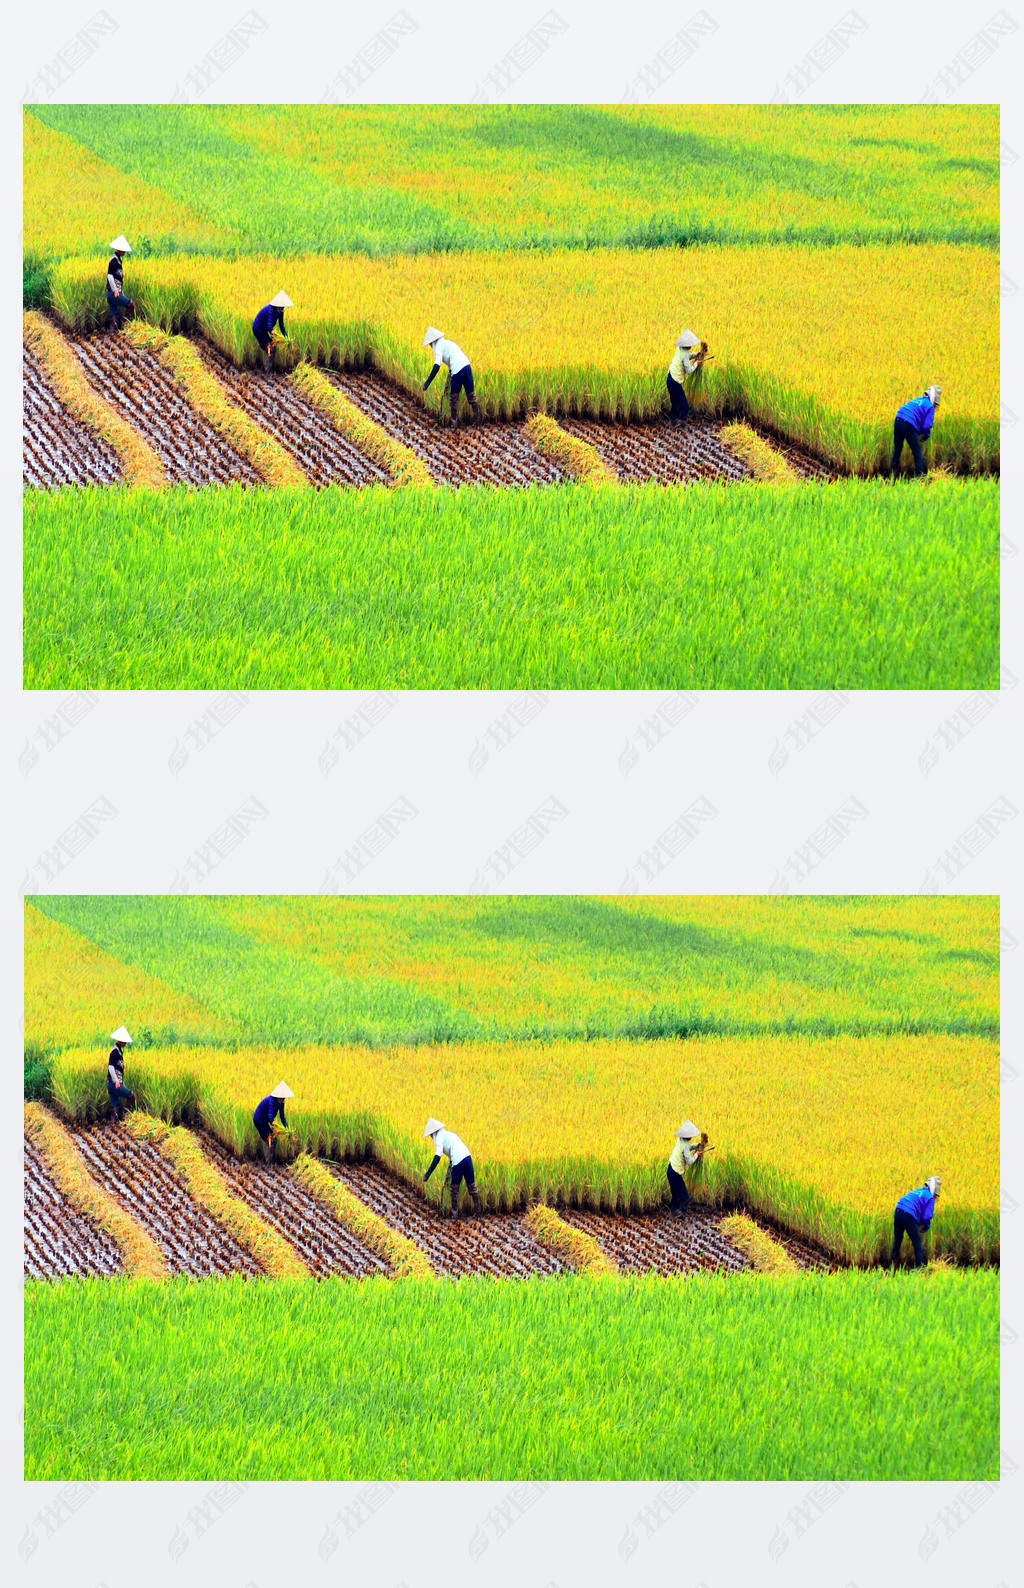 Farmers harvesting on rice field, HaNoi, Vietnam.